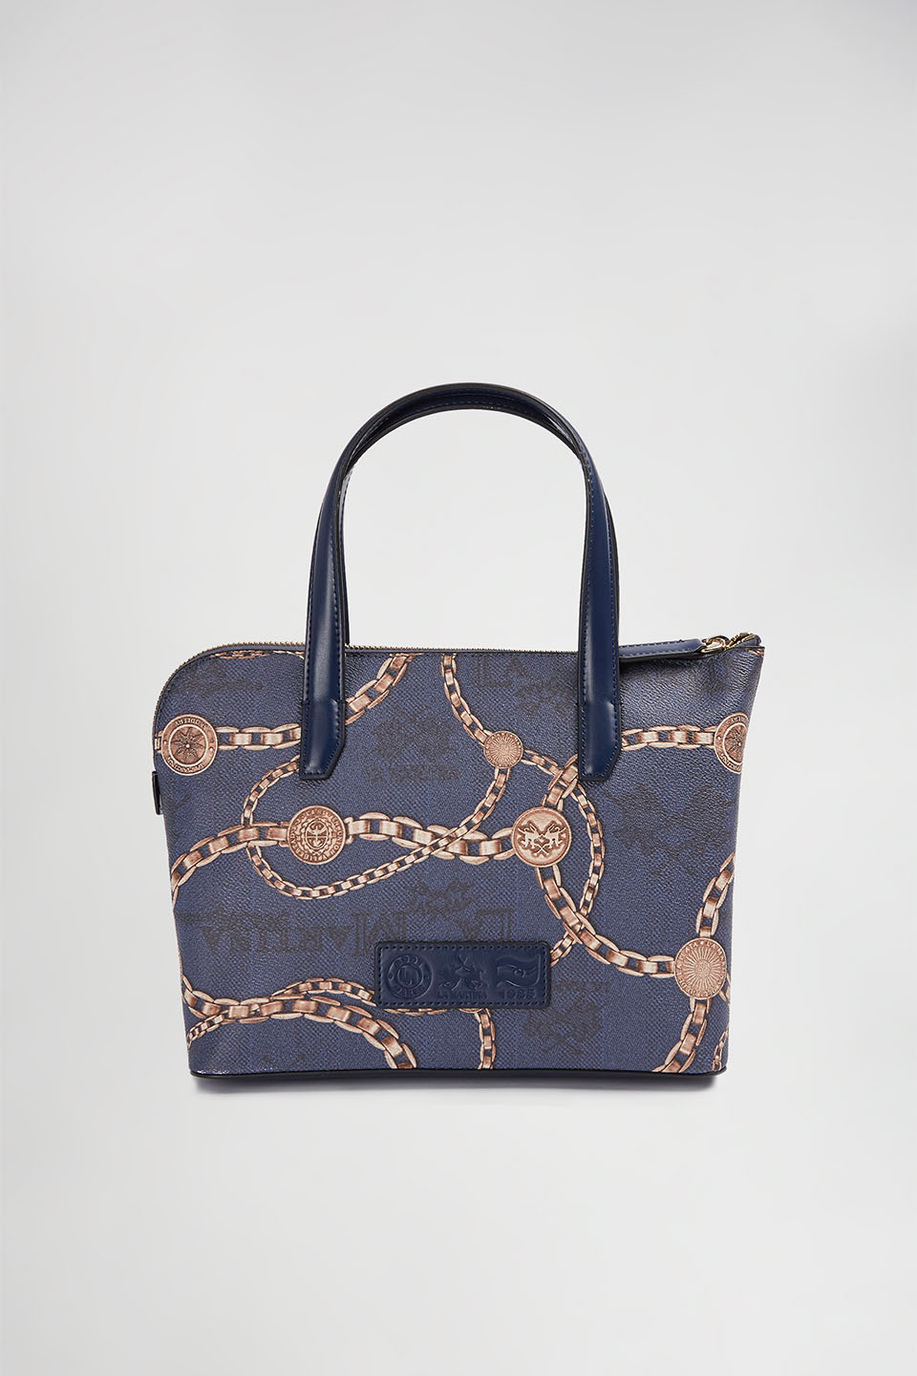 PU leather bag - Accessories Woman | La Martina - Official Online Shop